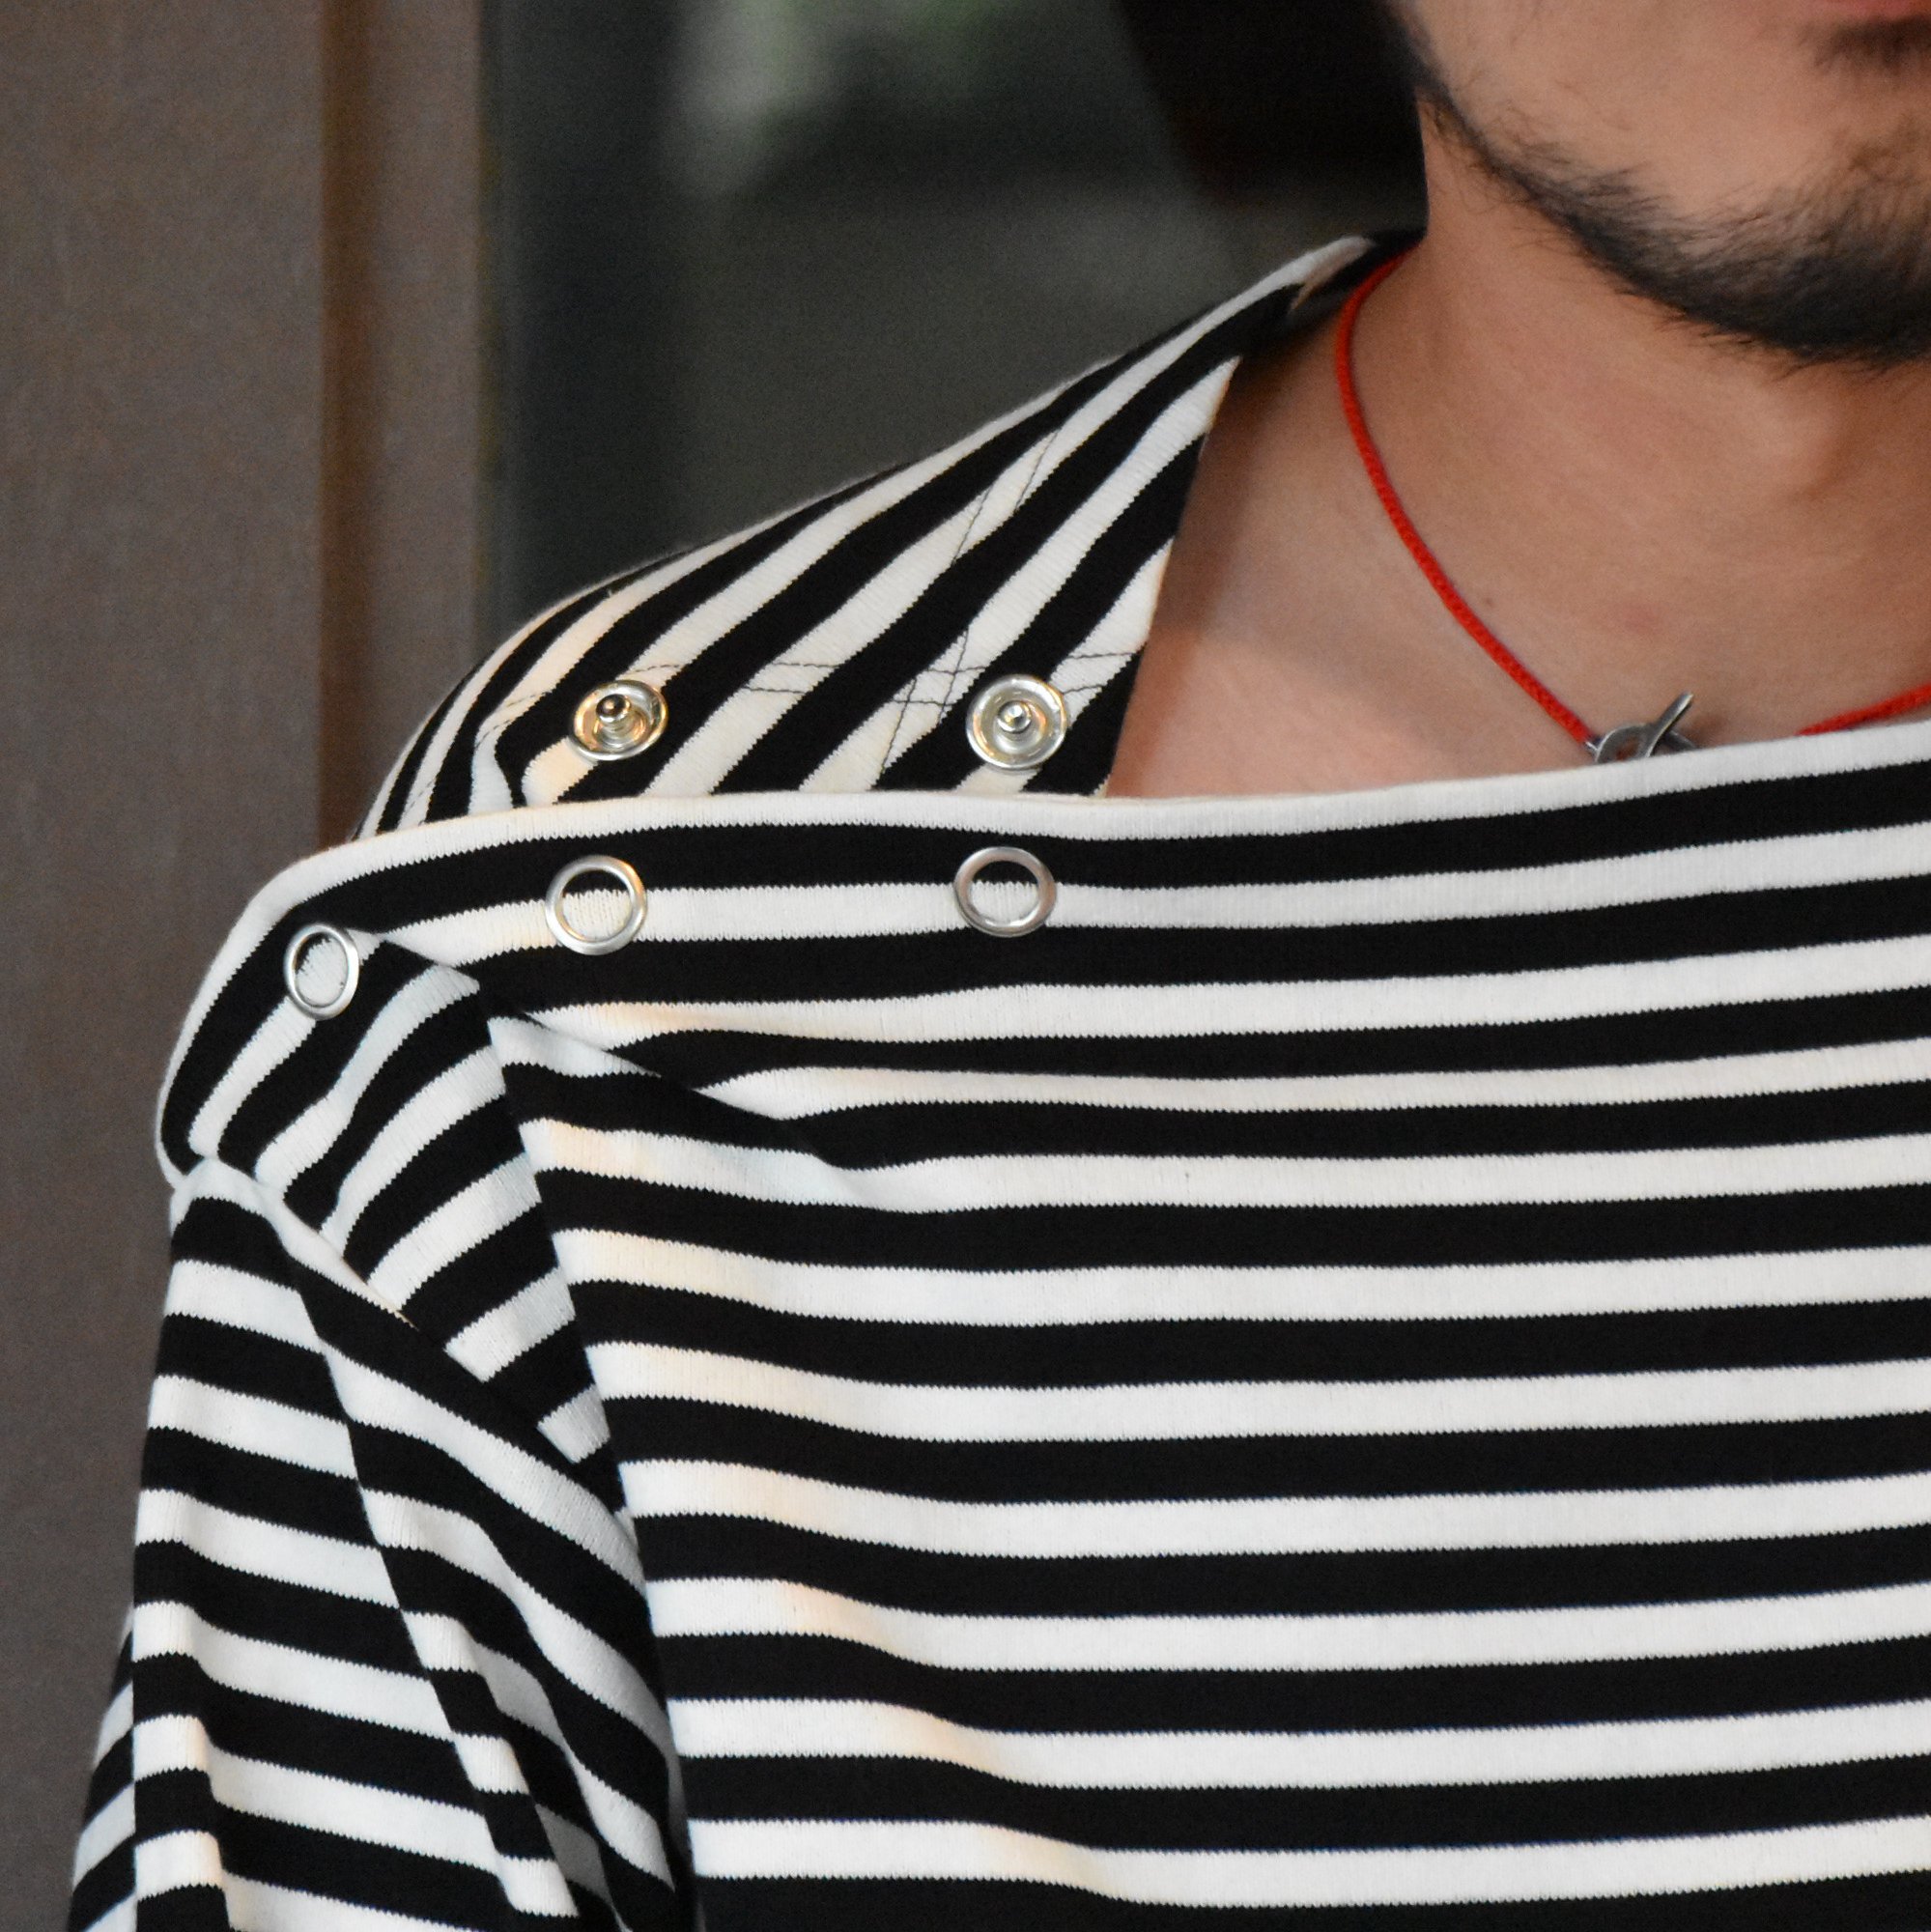 y40% off salezTAKAHIRO MIYASHITA The SoloIst.(^Jq~V^ U \CXg) shoulder buttoned boat neck shirt # sc.0005cAW20(3)